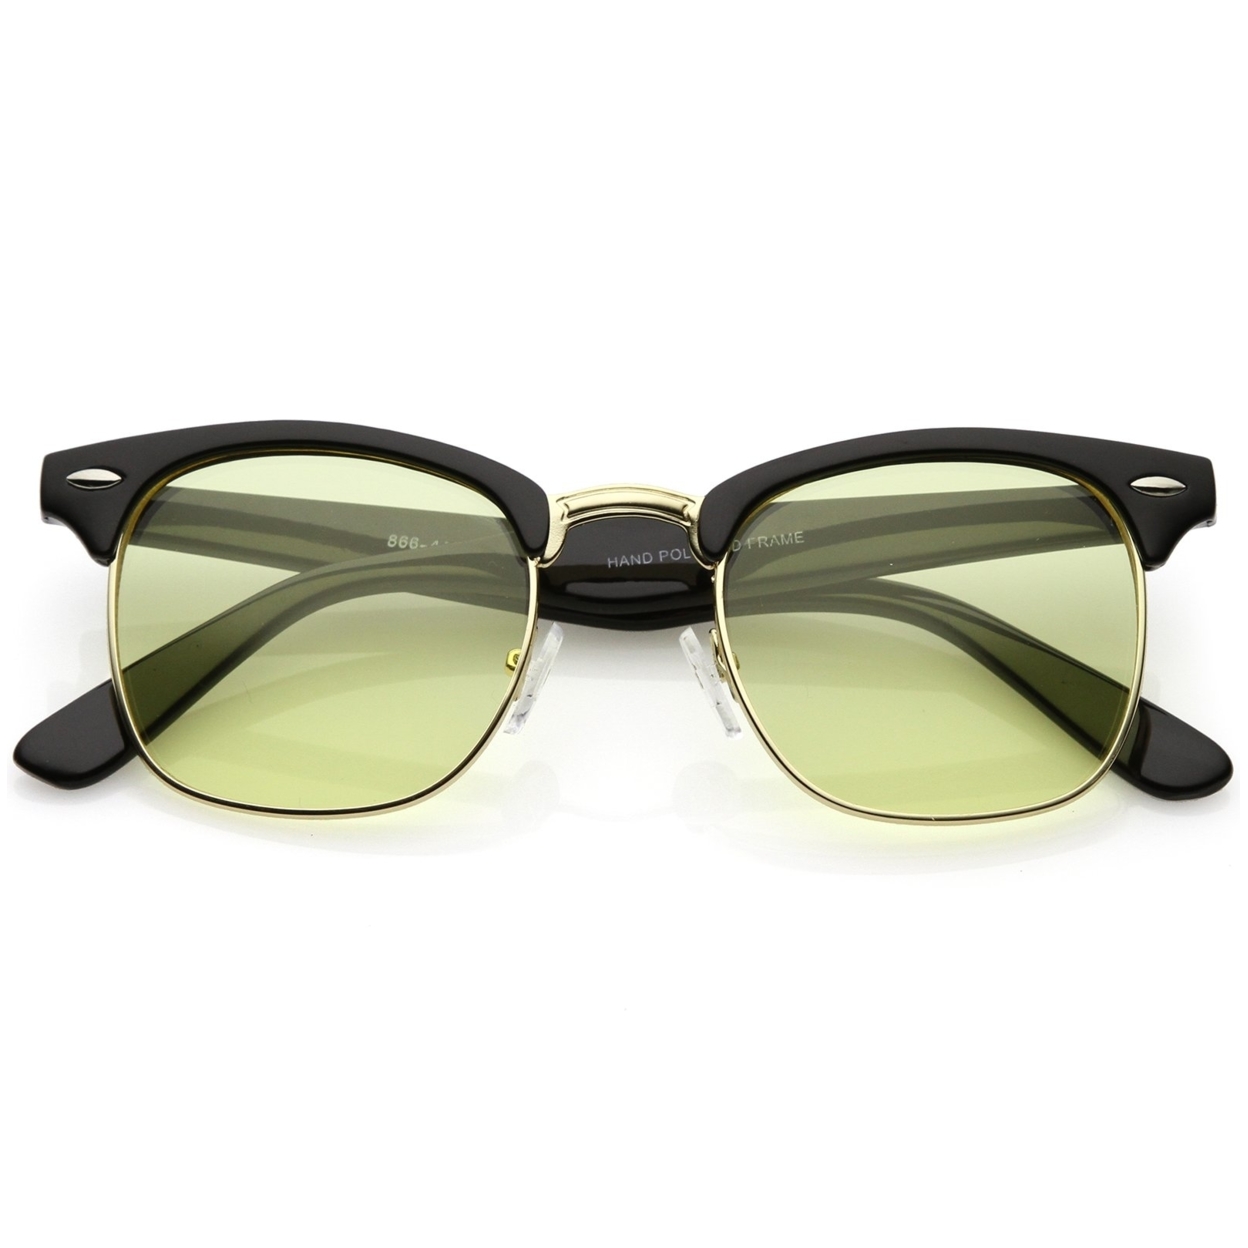 Modern Horn Rimmed Sunglasses Semi Rimless Color Tinted Square Lens 49mm - Black Gold / Pink